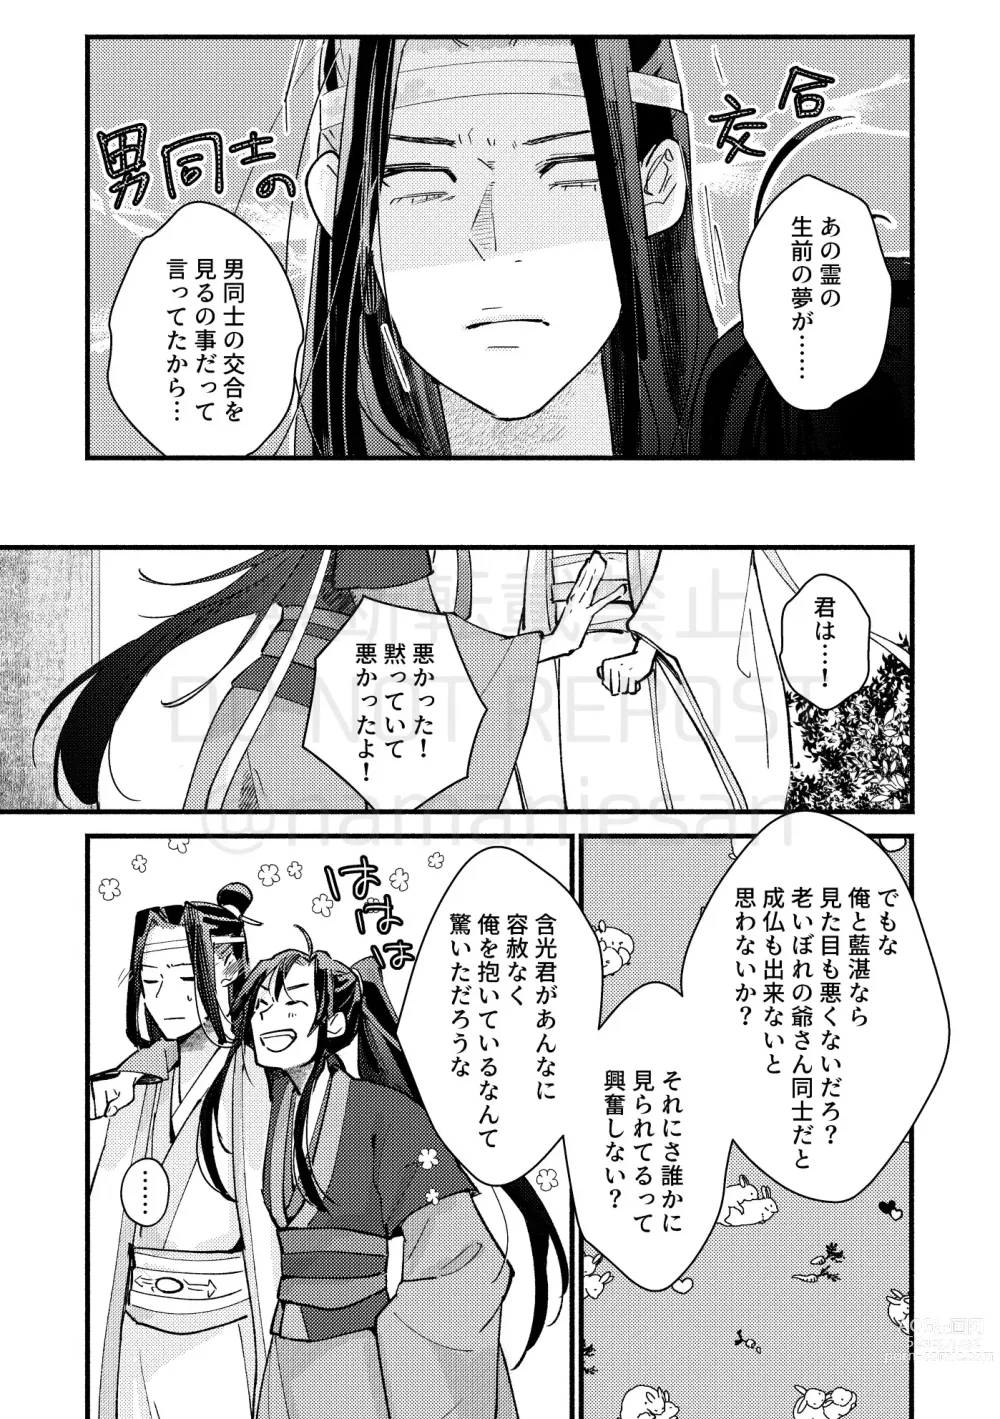 Page 55 of doujinshi Gyouan nite Koe o Kiku